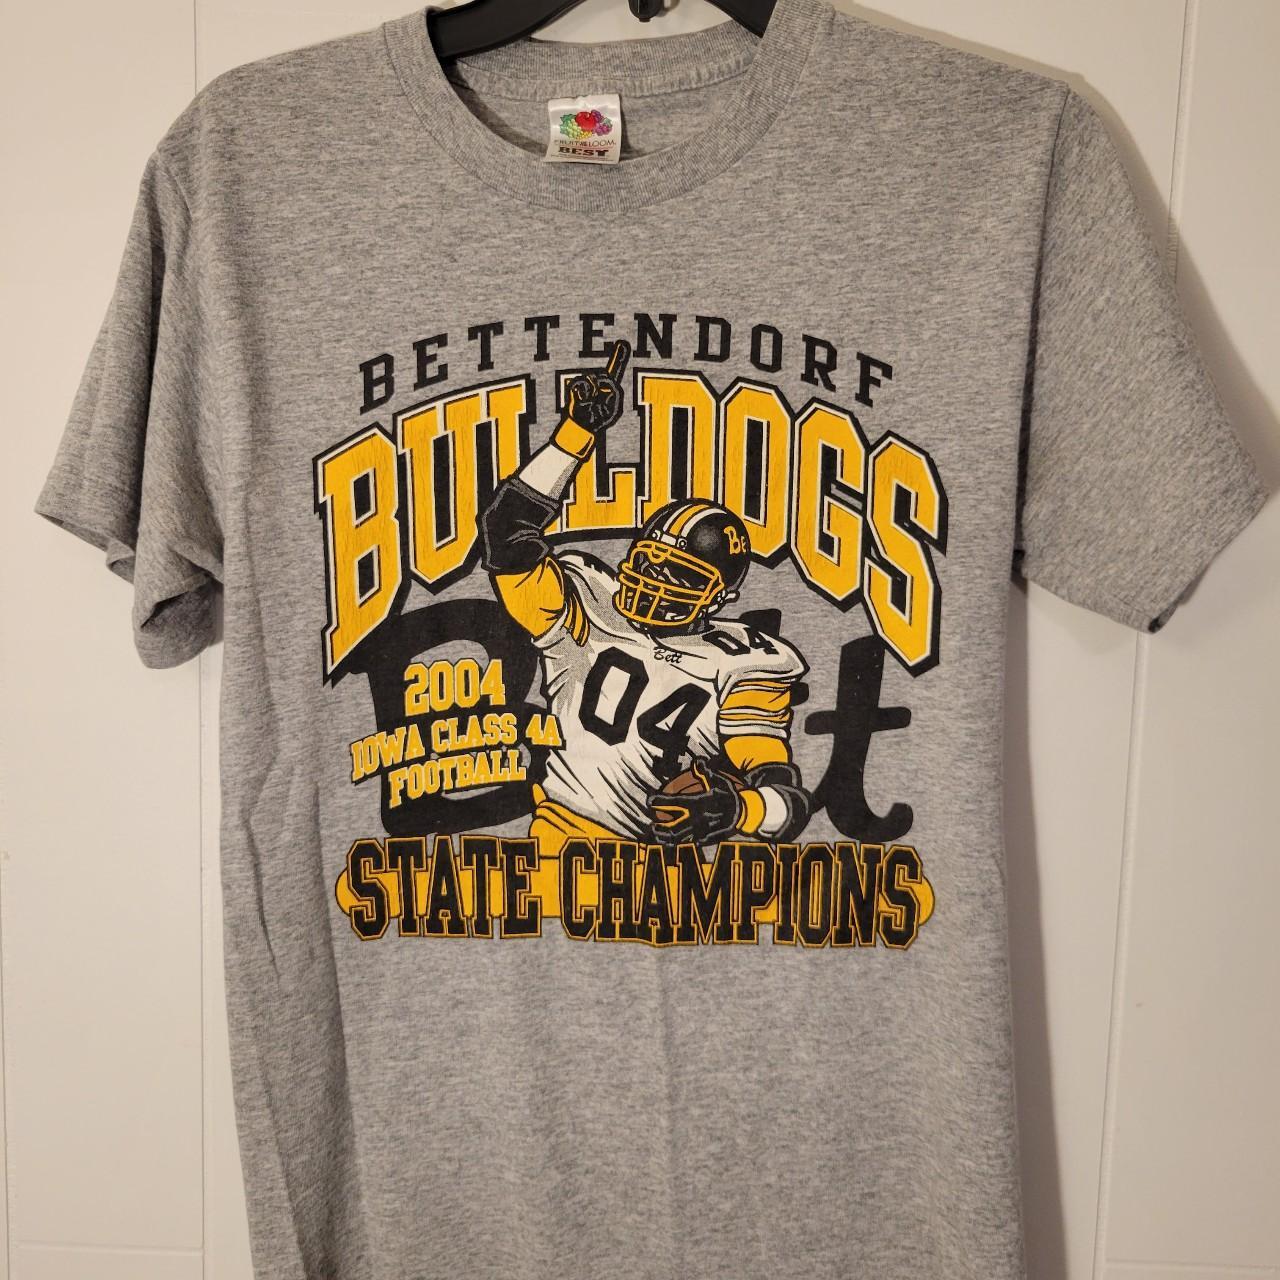 Vintage 2004 NCAA Mens Bettendorf Bulldogs Graphic... - Depop